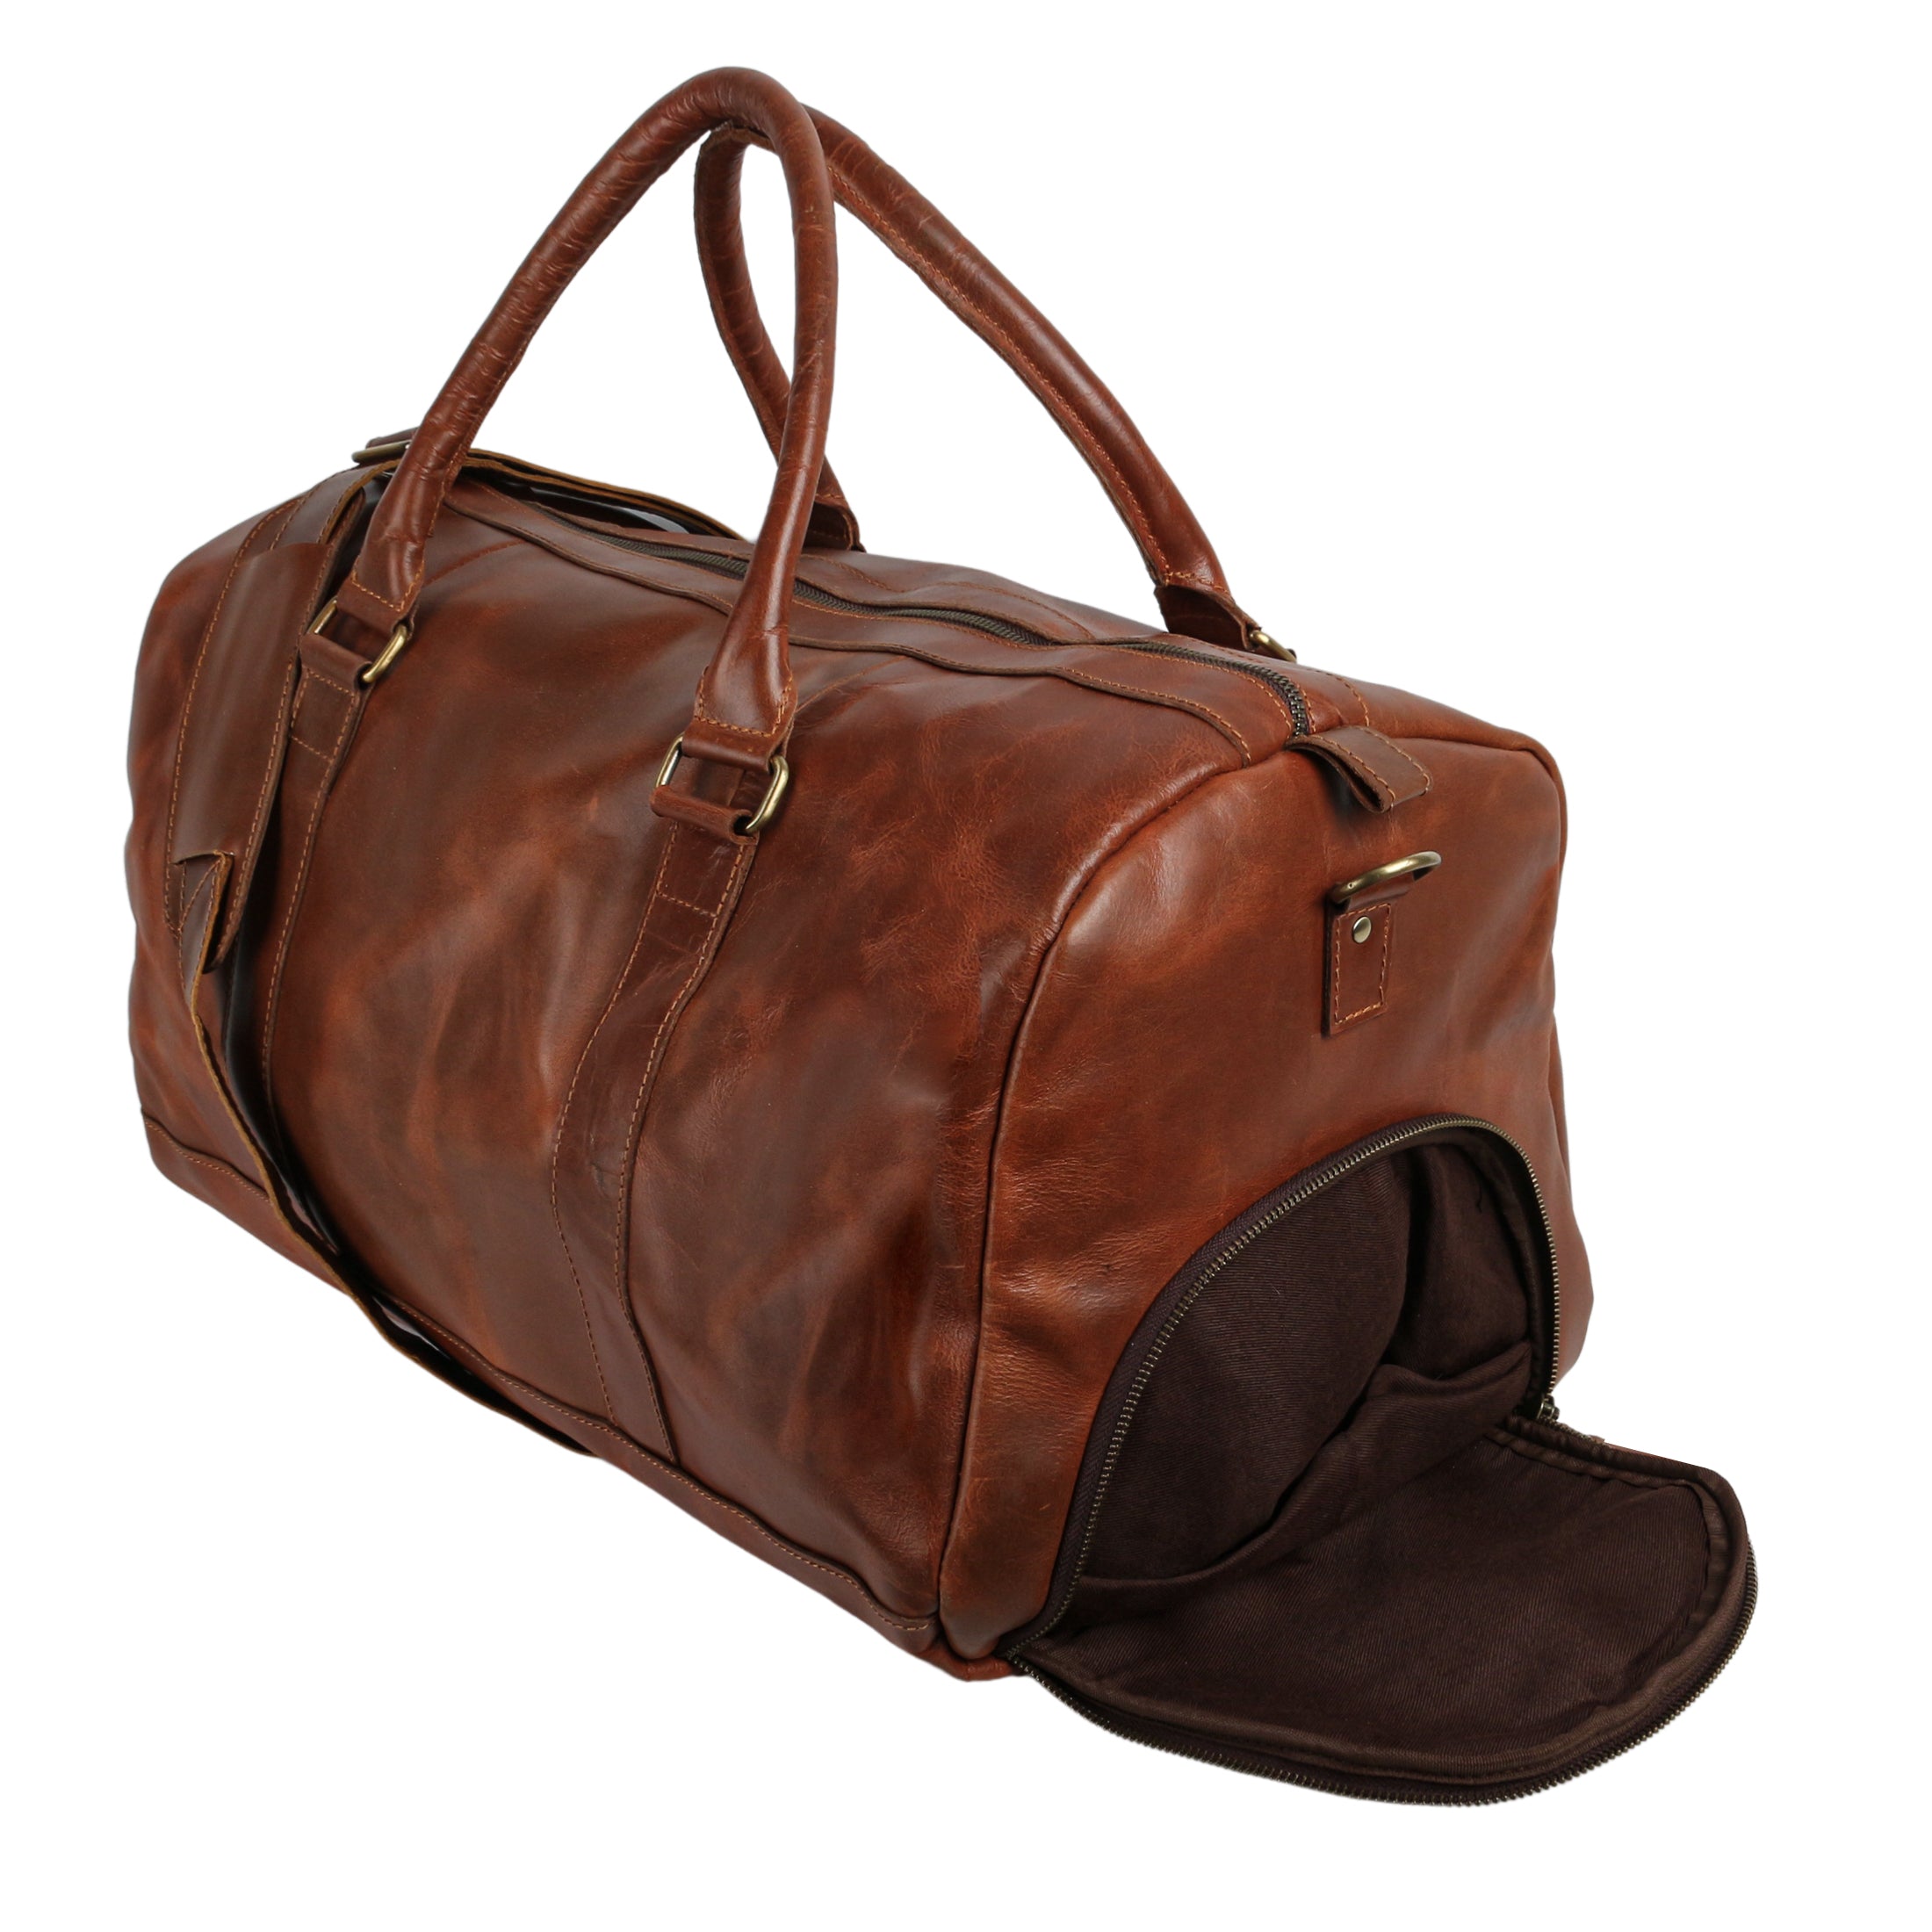 KomalC 24 Inch Leather Duffel Bags for Men and Women Full Grain